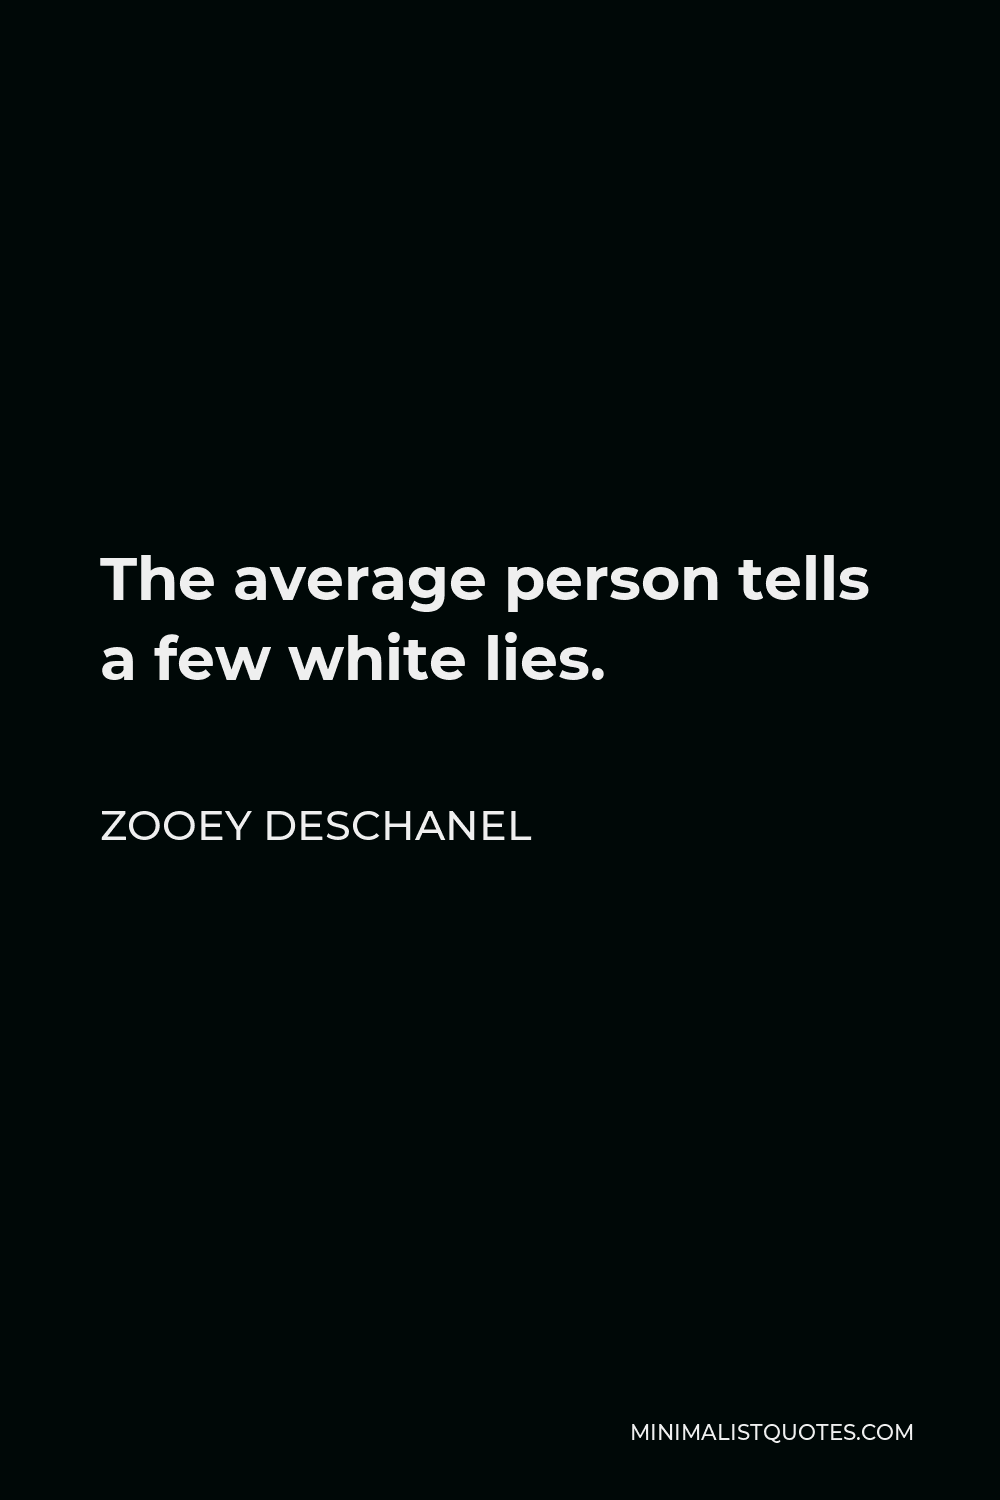 Zooey Deschanel Quote - The average person tells a few white lies.